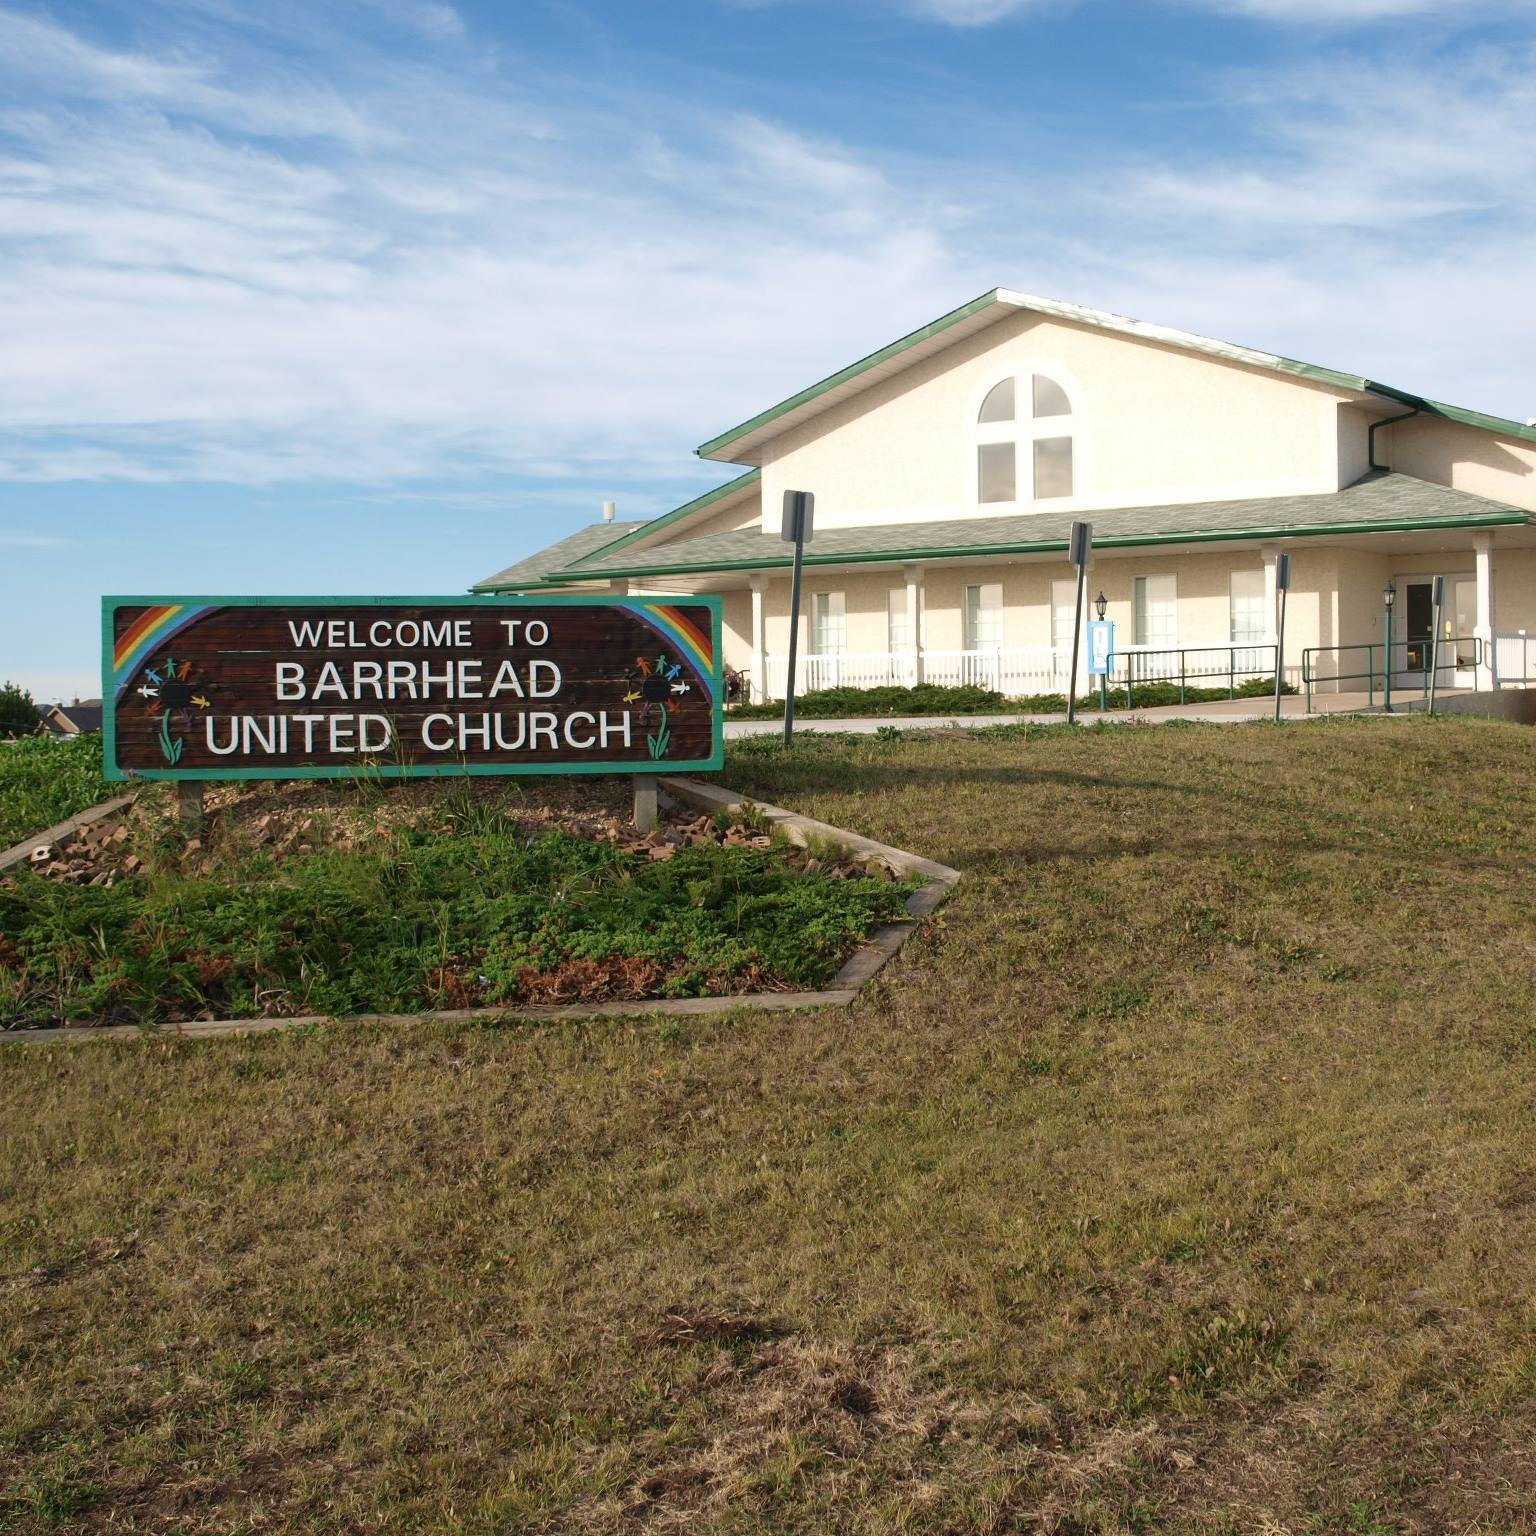 Barhead united church